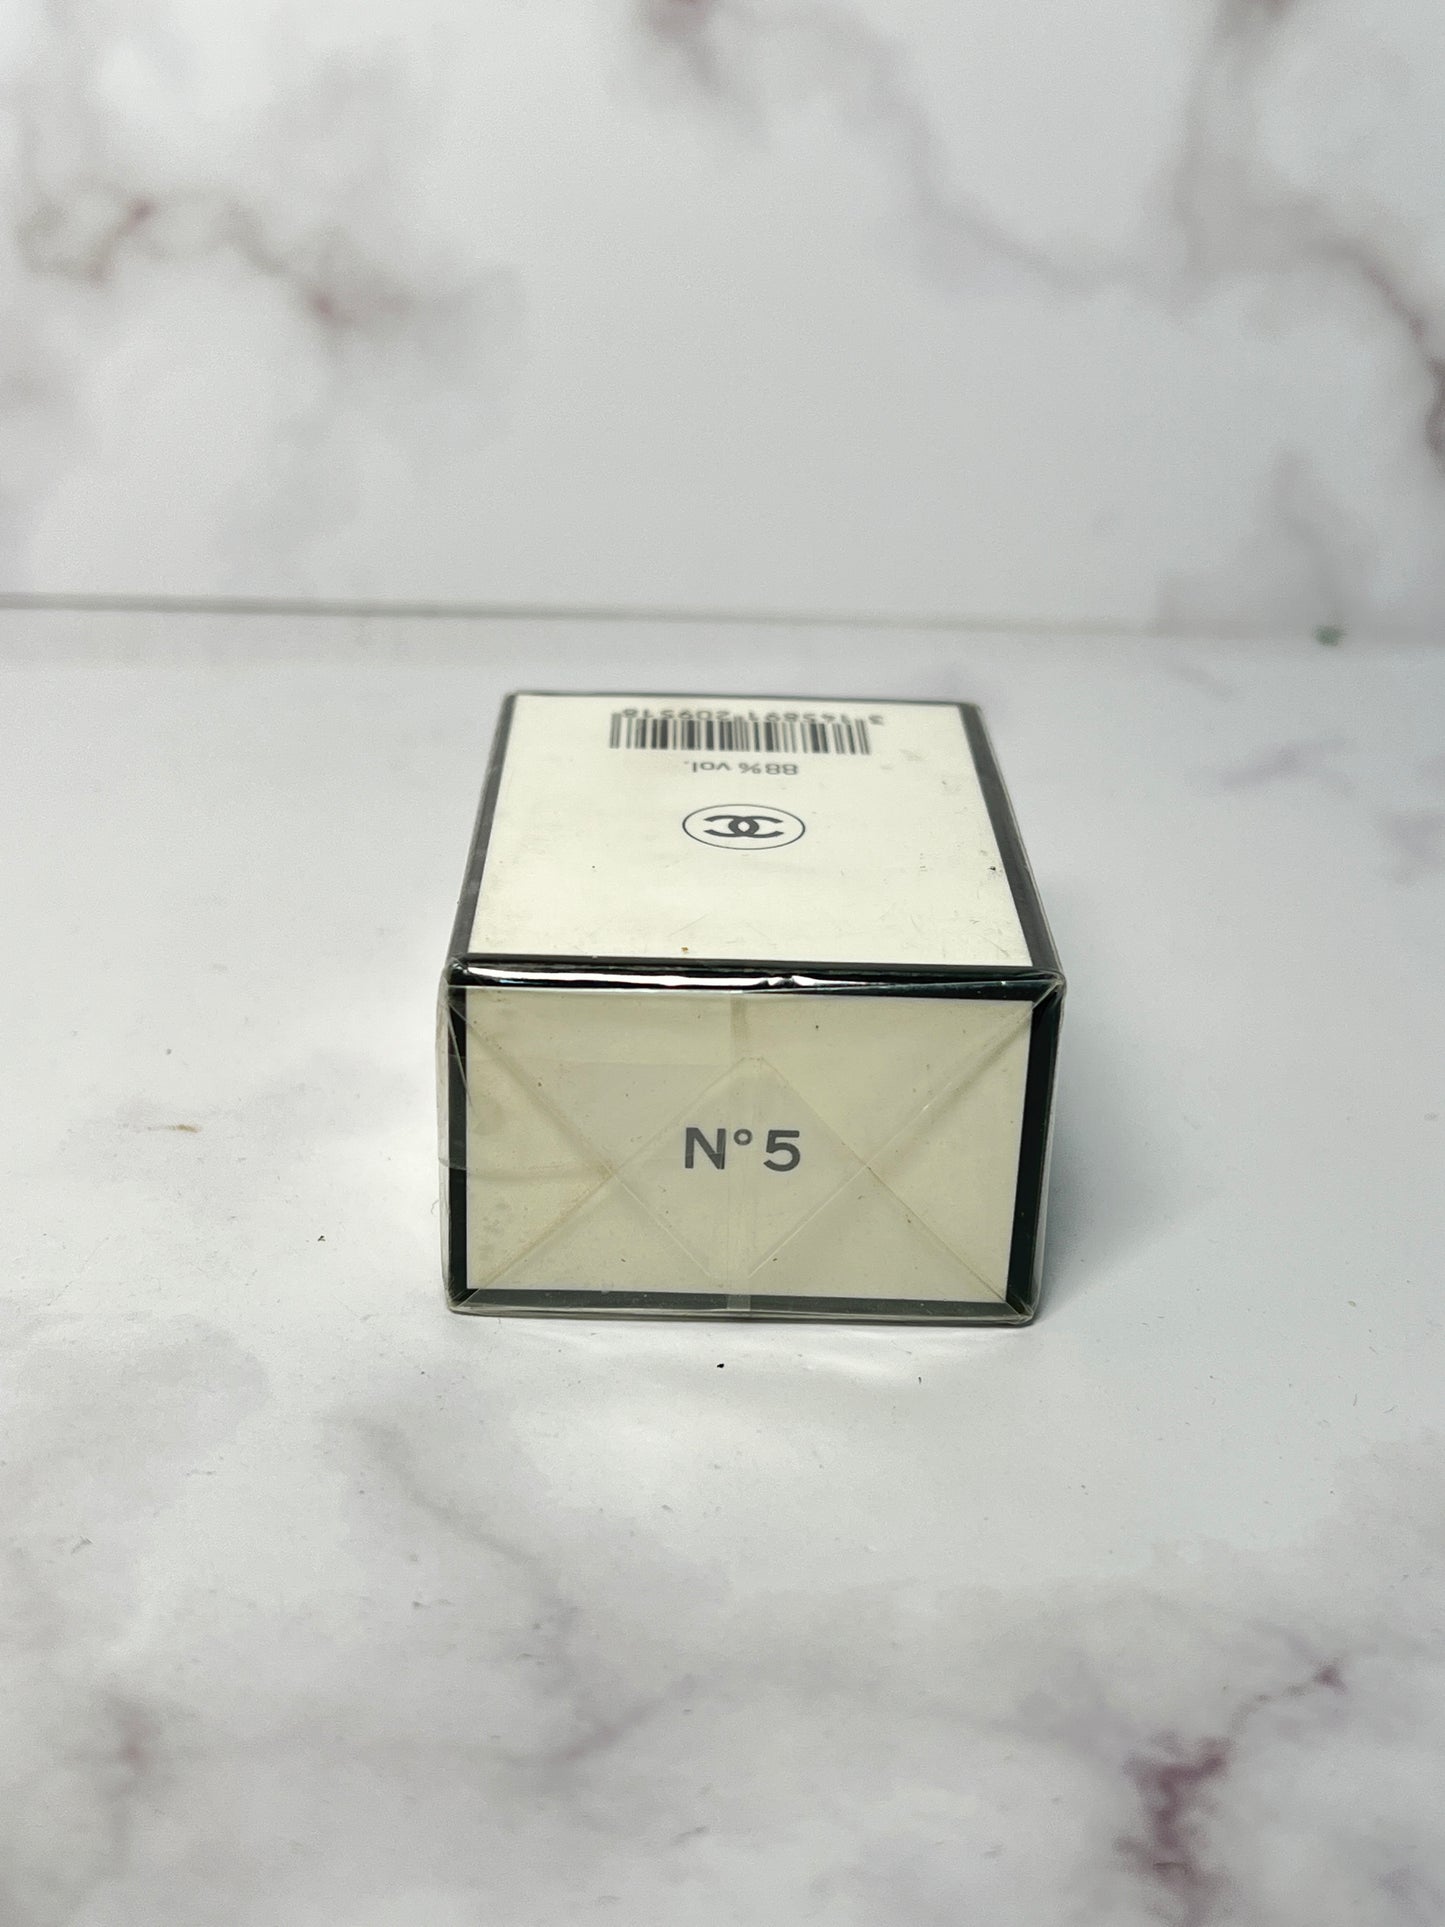 Rare Chanel no.5  7 ml 1/4 oz Parfum Perfume - JUNE-D17